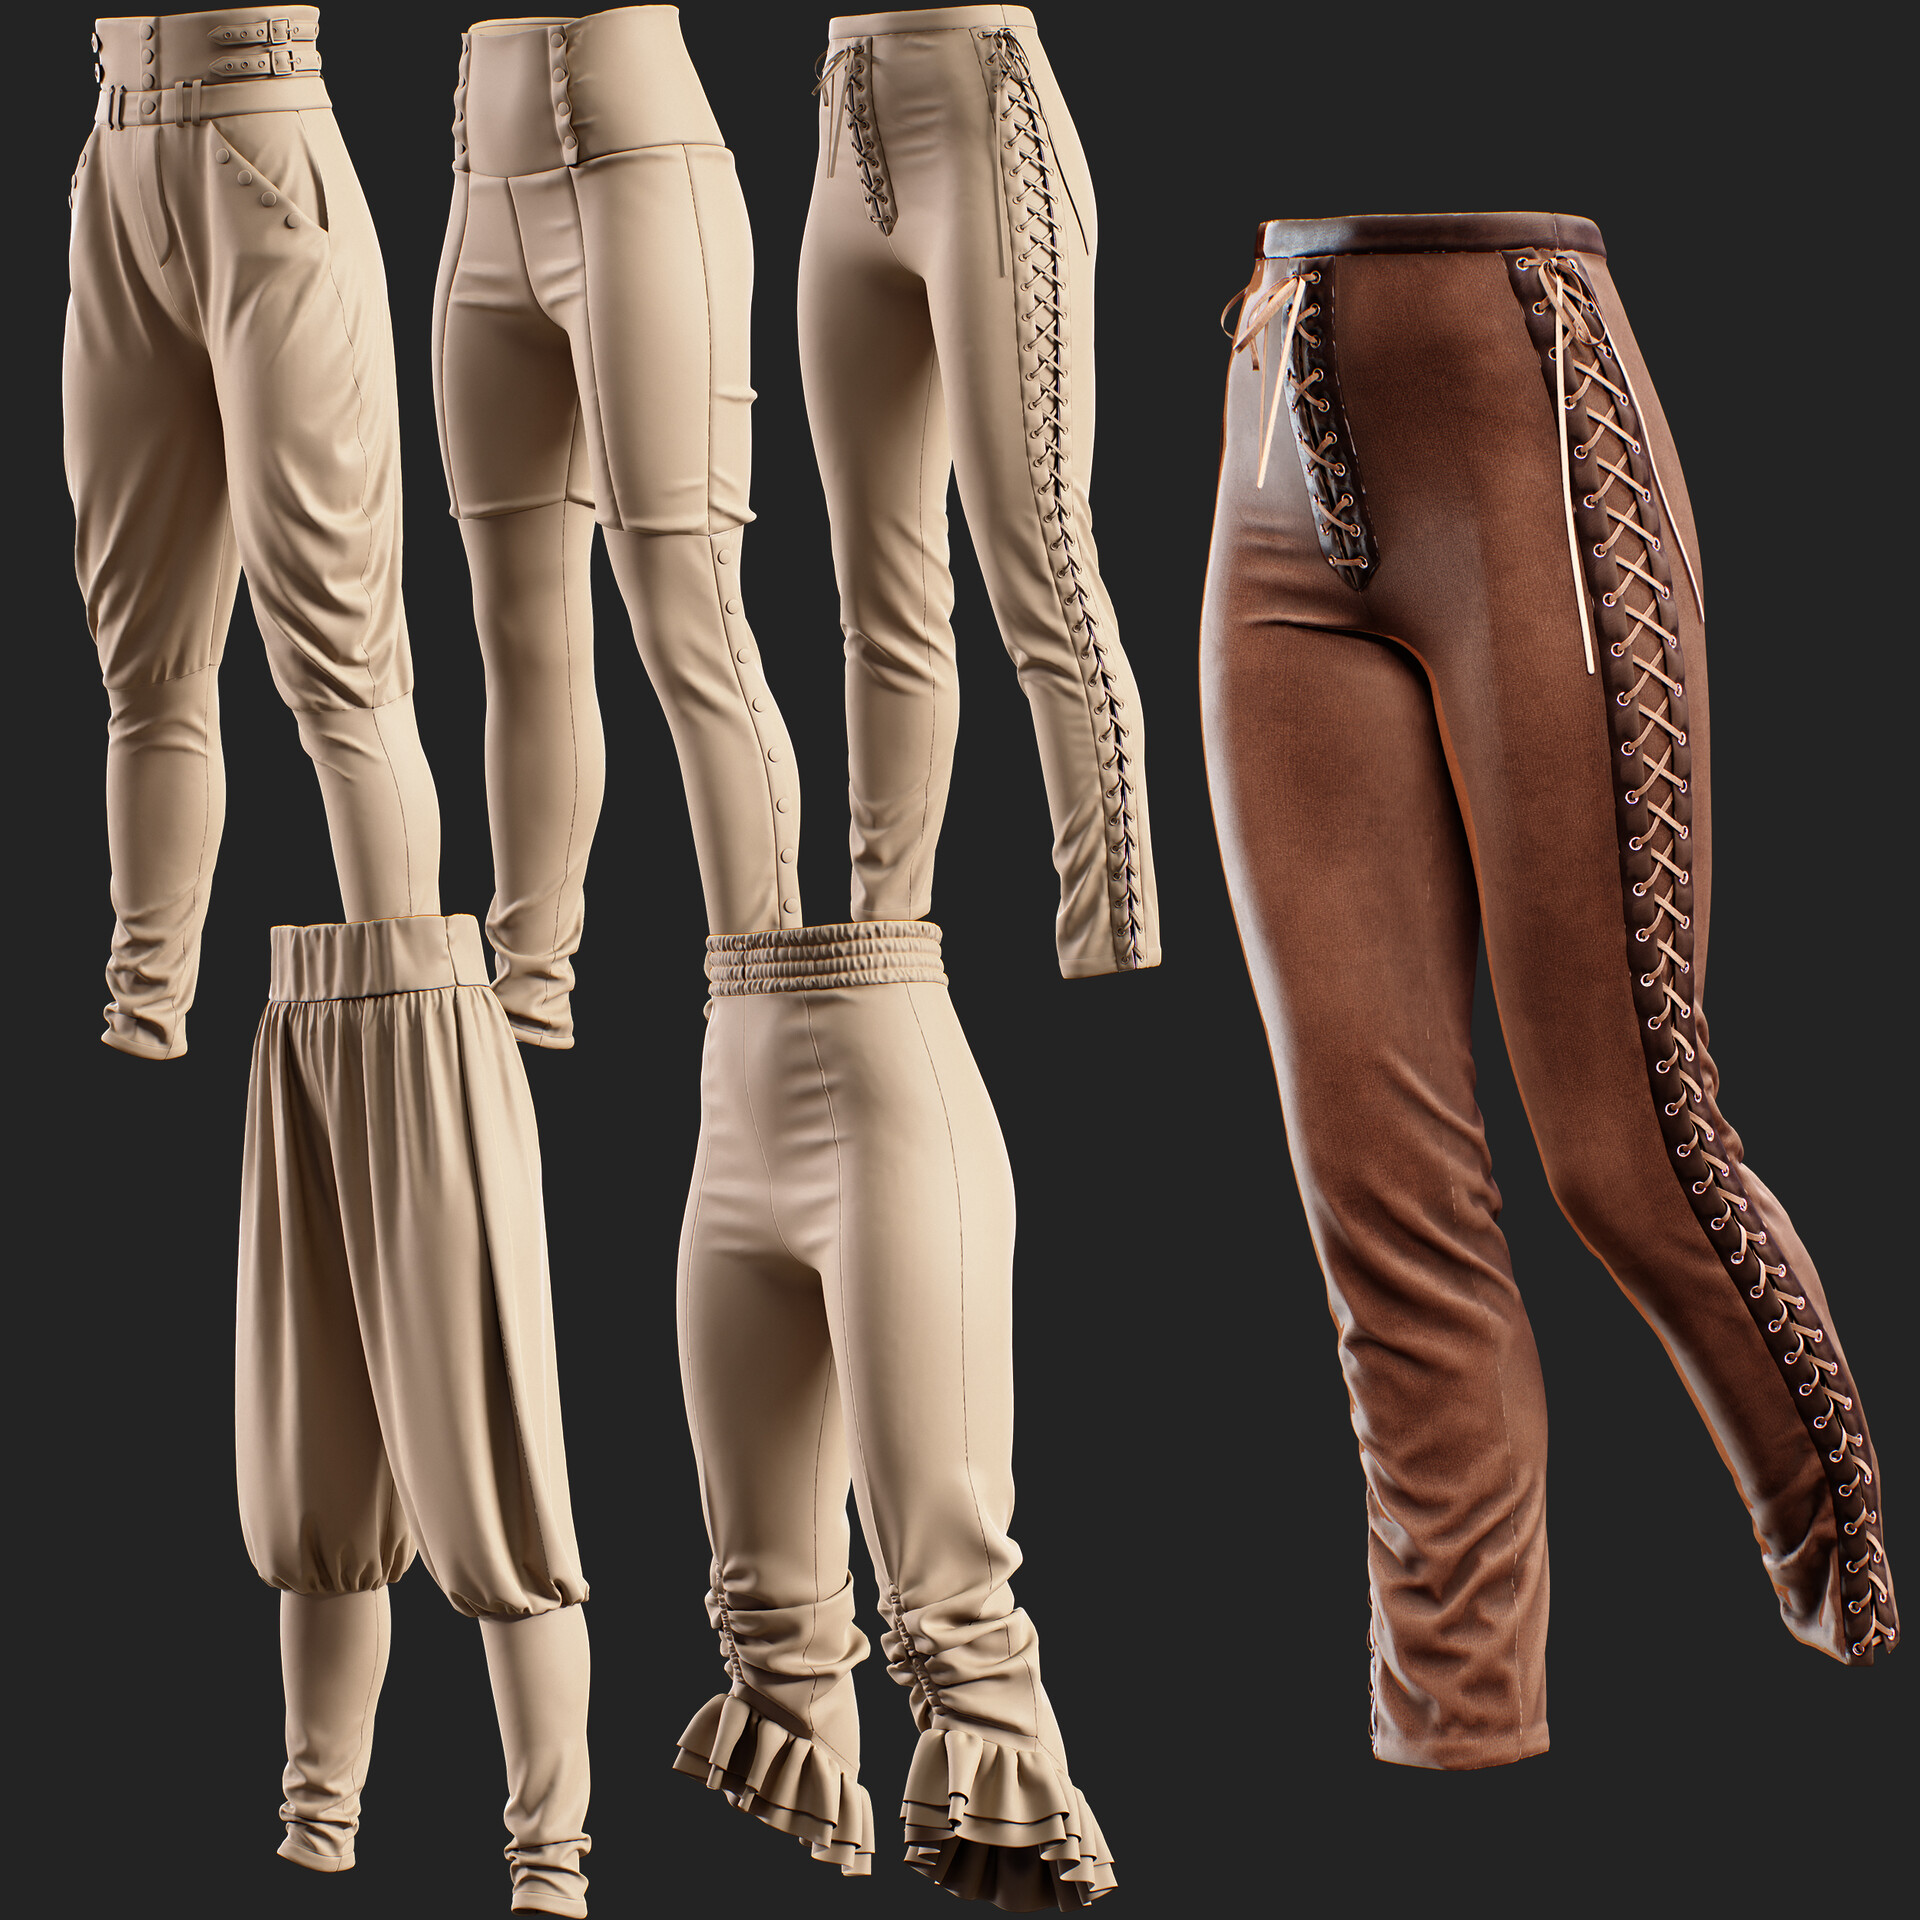 Women's medieval pants